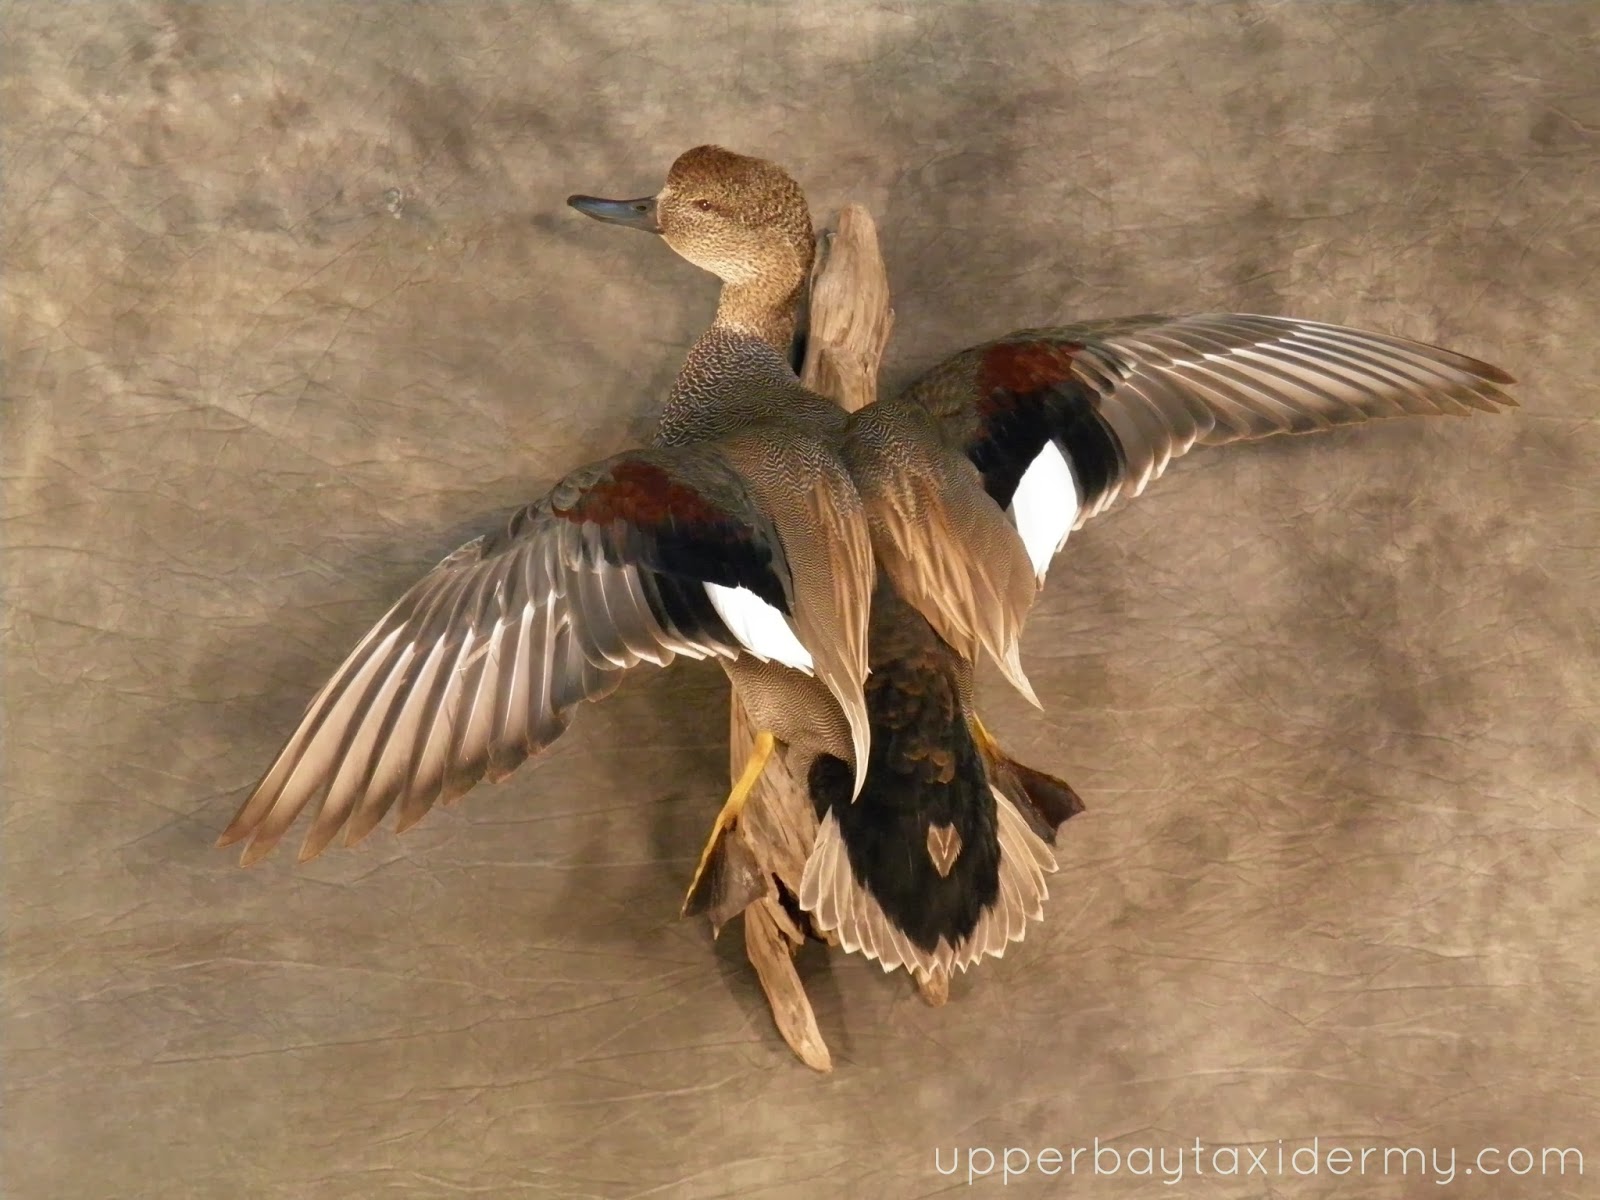 Upper Bay Taxidermy Mobile Gallery: Ducks